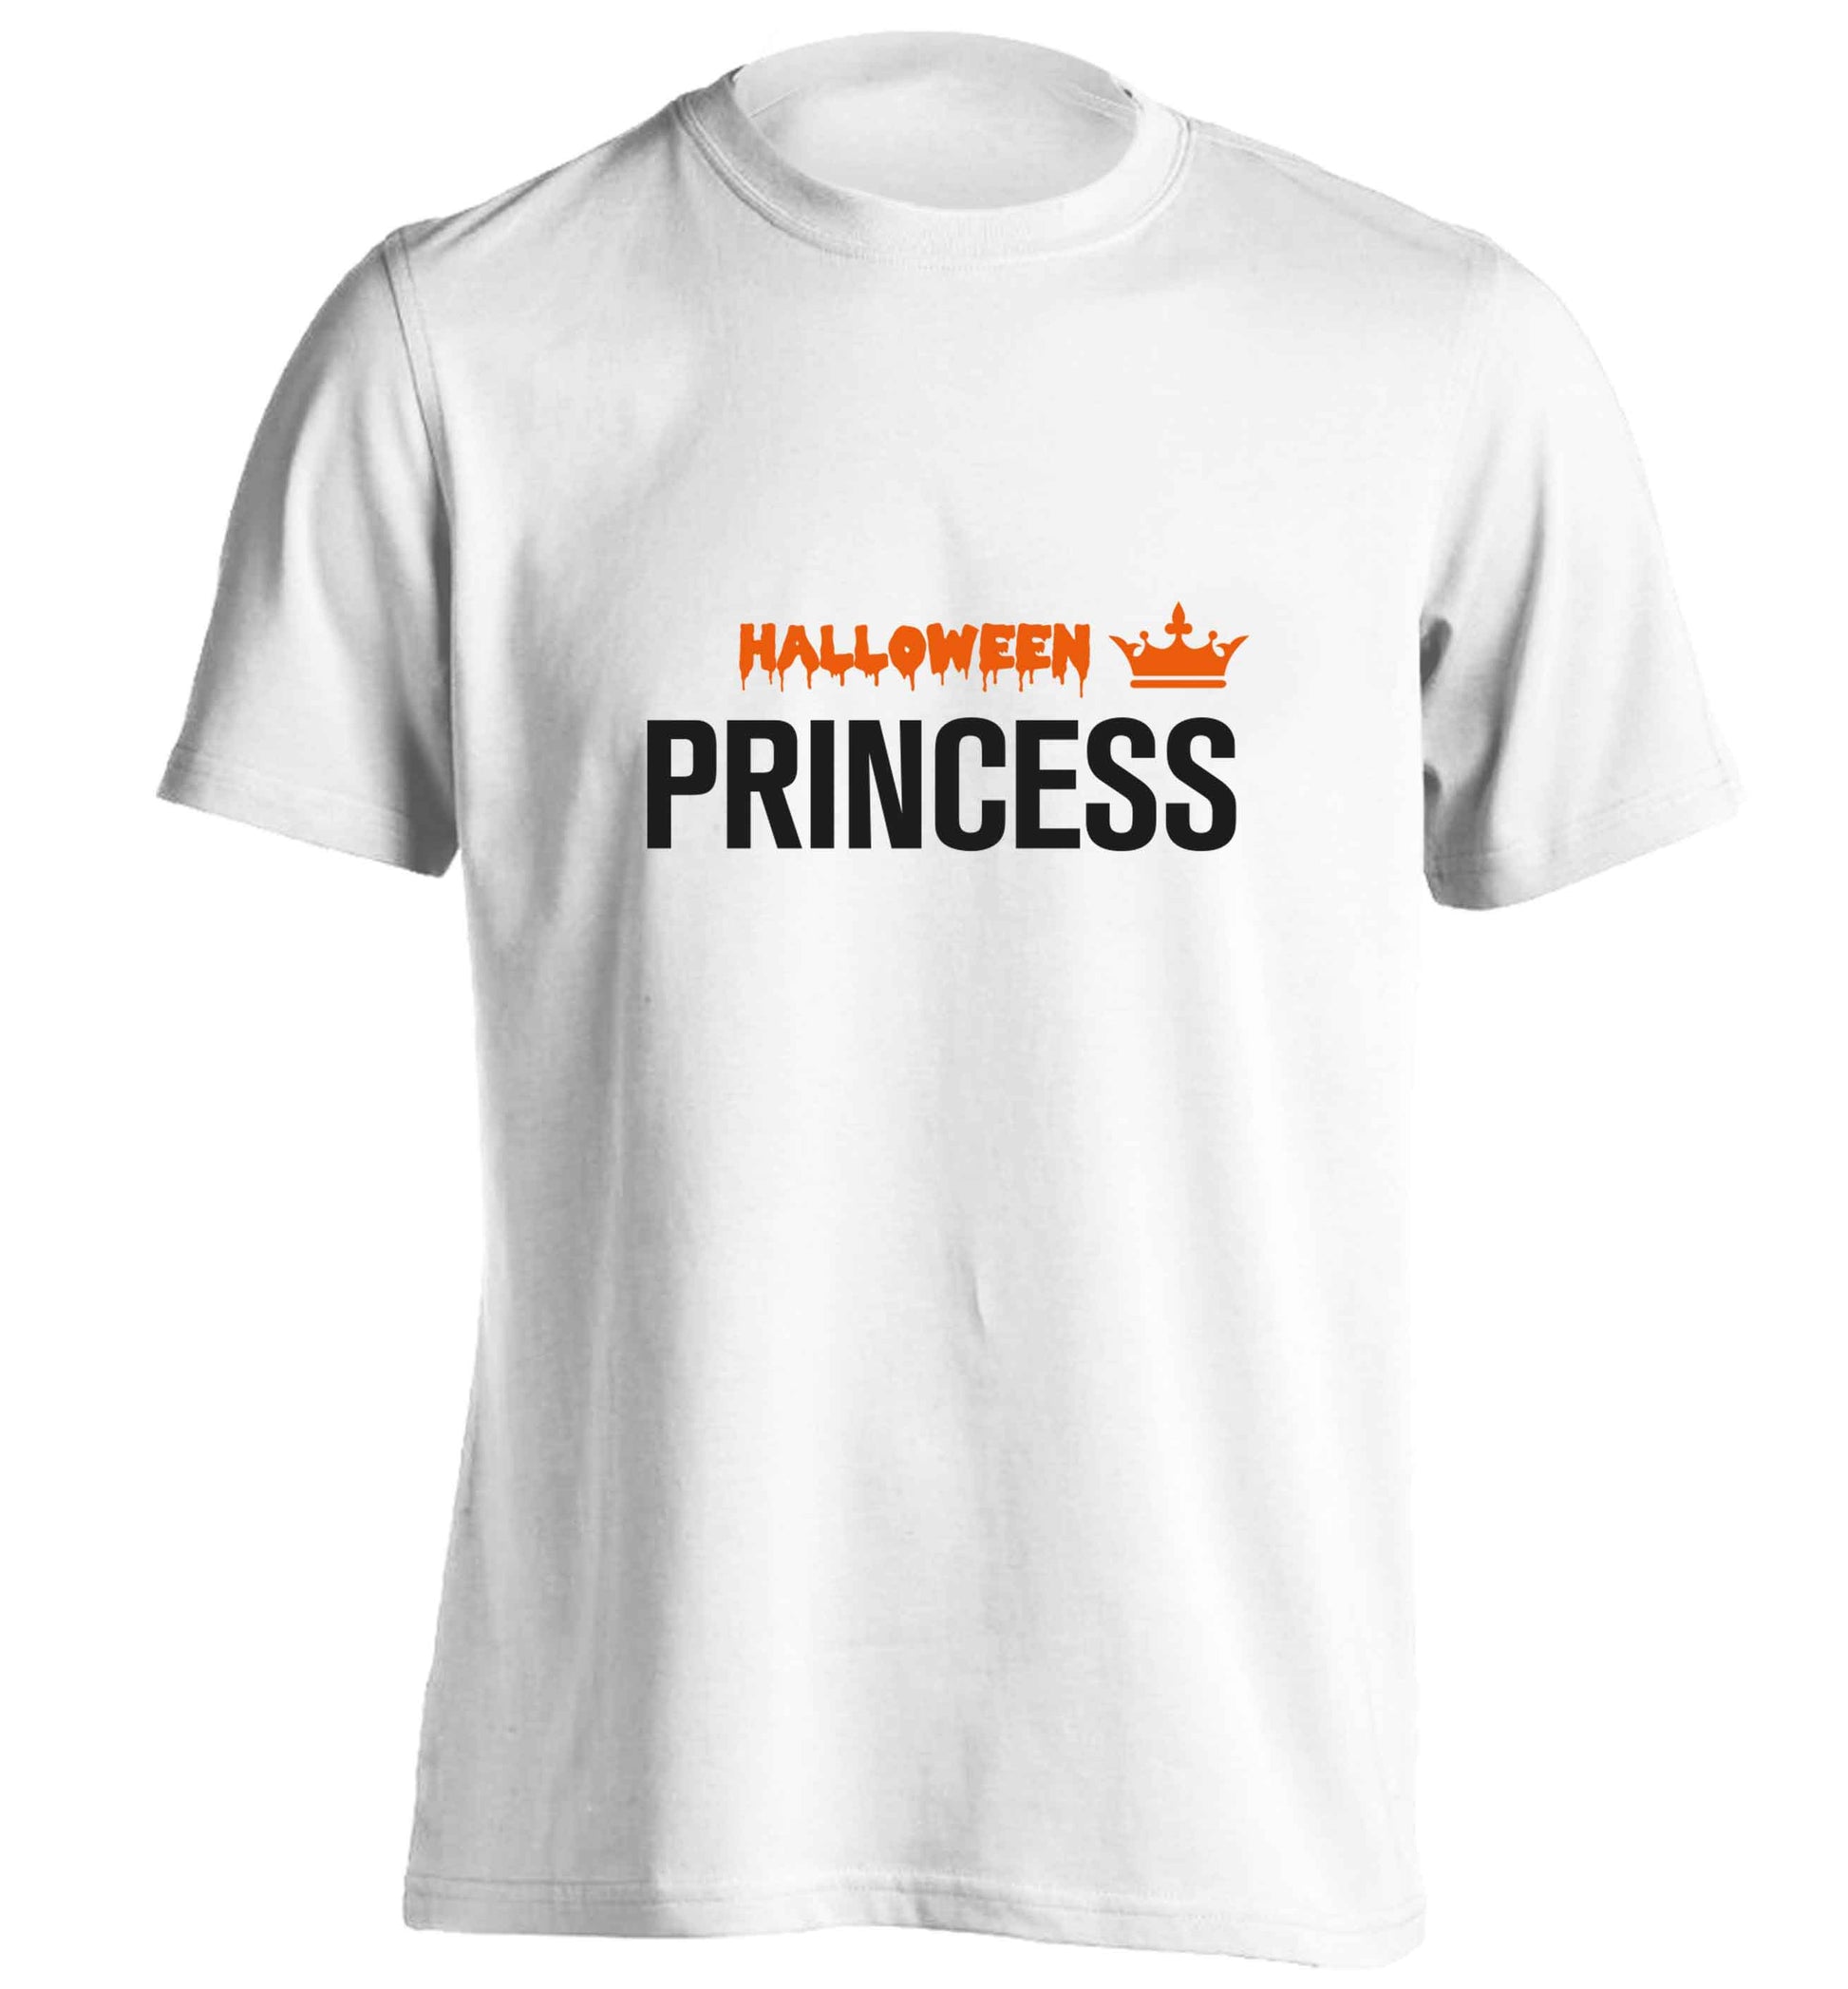 Halloween princess adults unisex white Tshirt 2XL